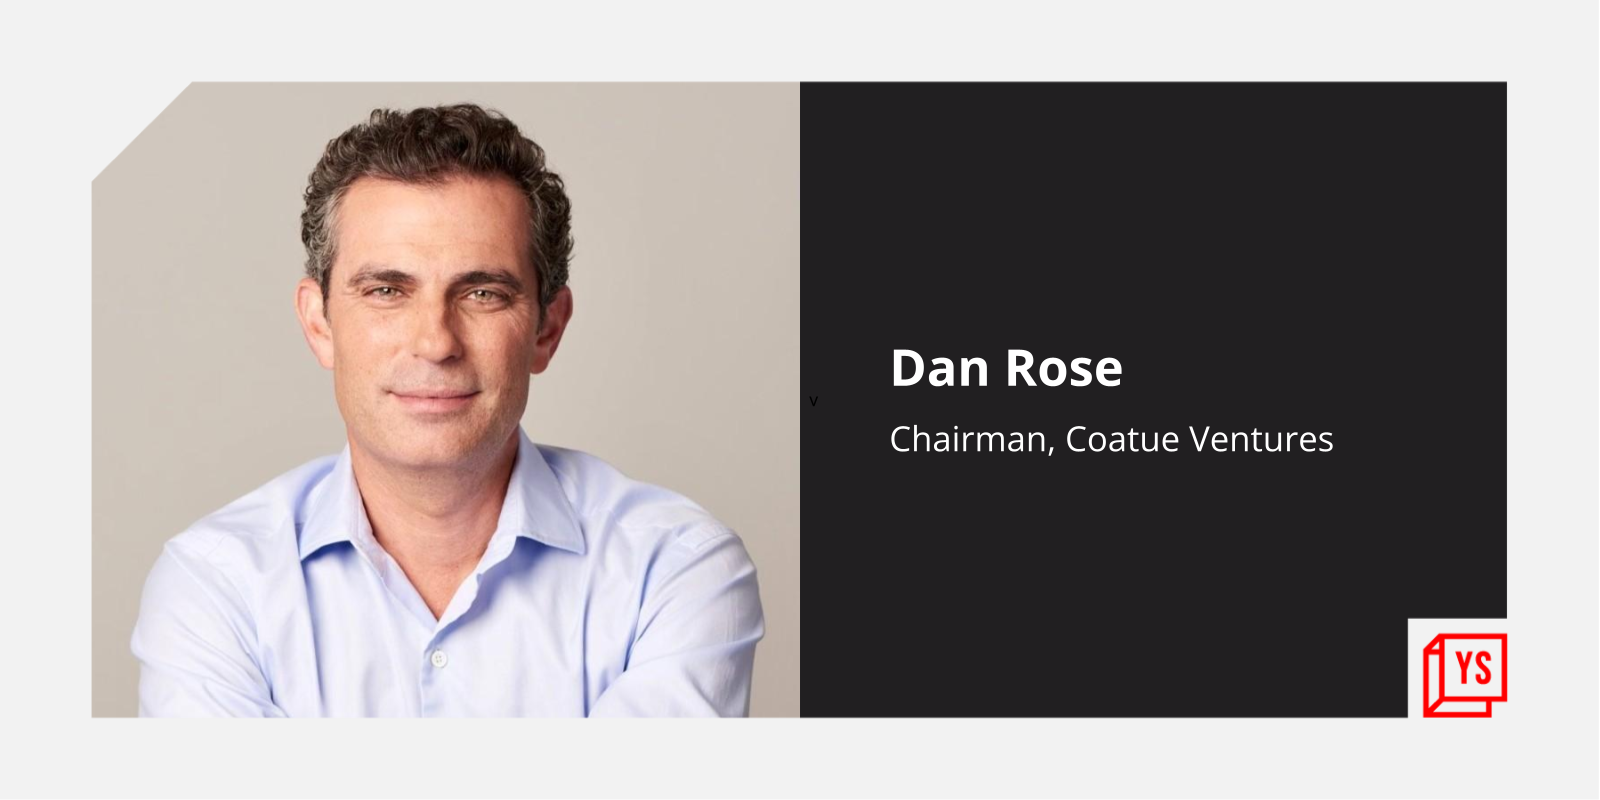 Ex-Amazon and Facebook executive Dan Rose gives fund raising advice